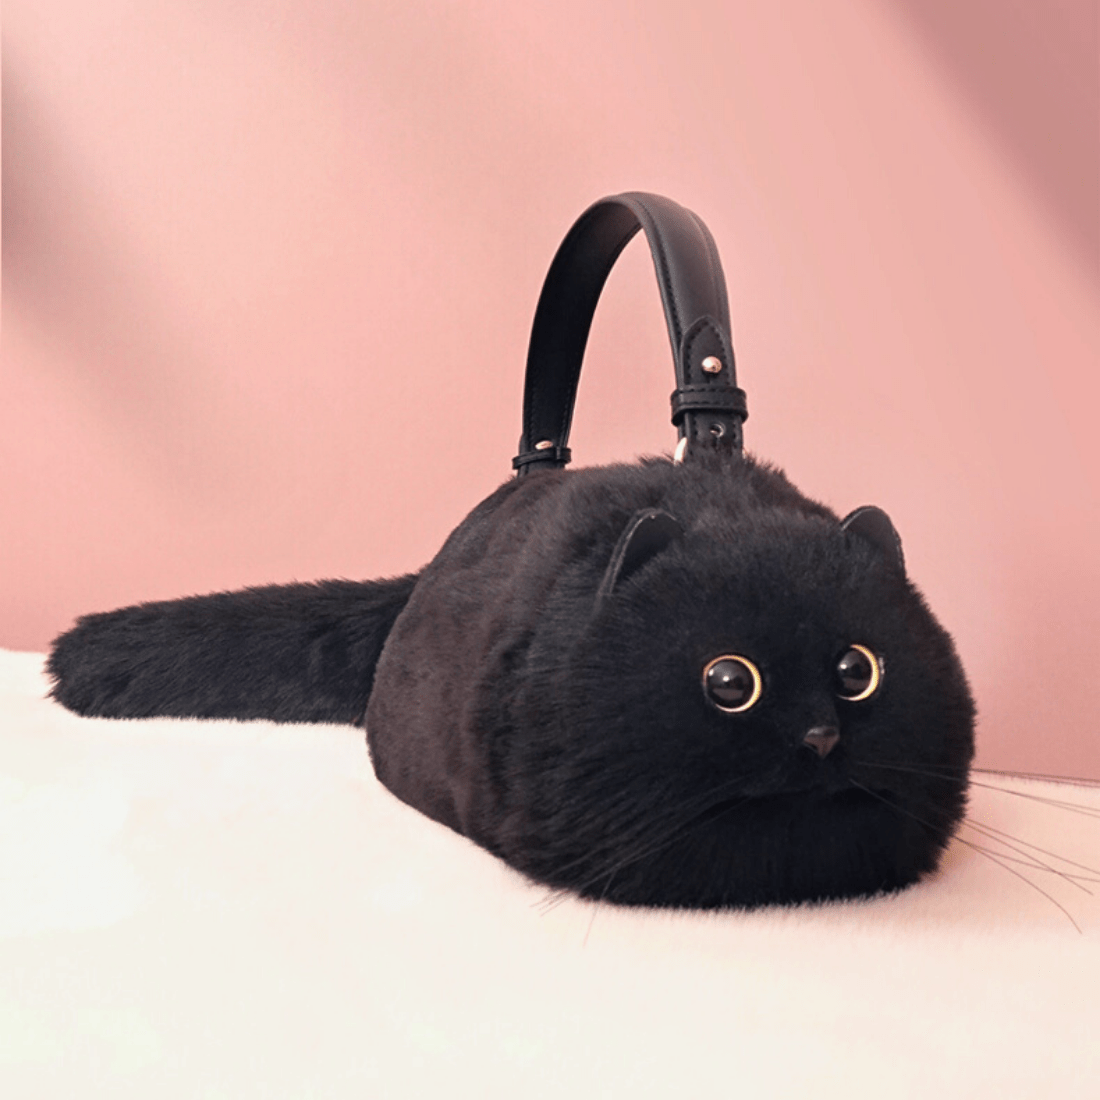 realistic design black cat handbag that looks amazingly real